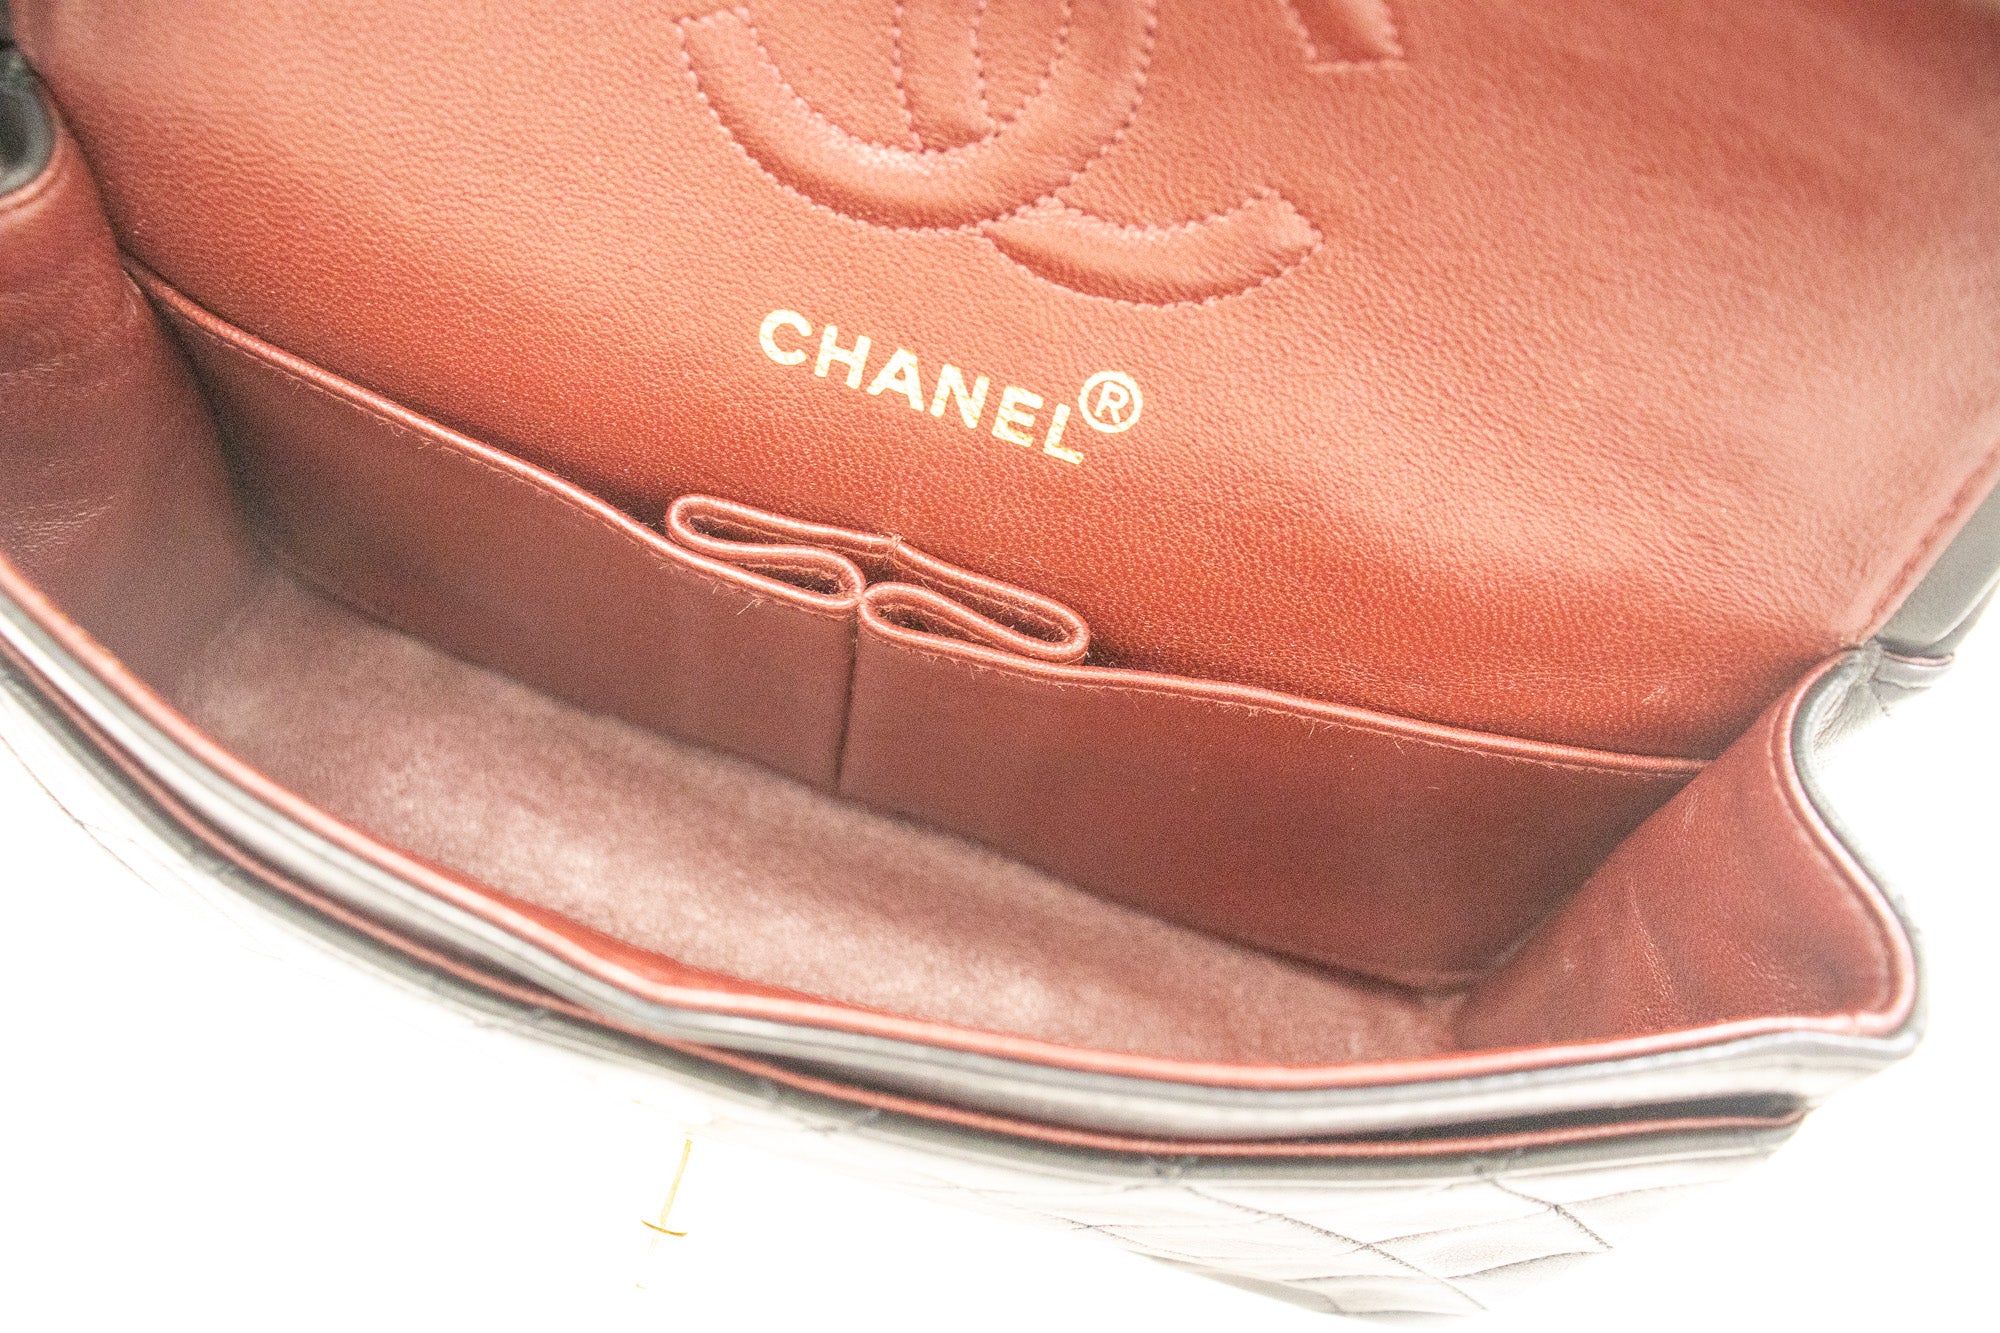 Chanel Vintage Orange Lambskin Large Classic Double Flap Bag